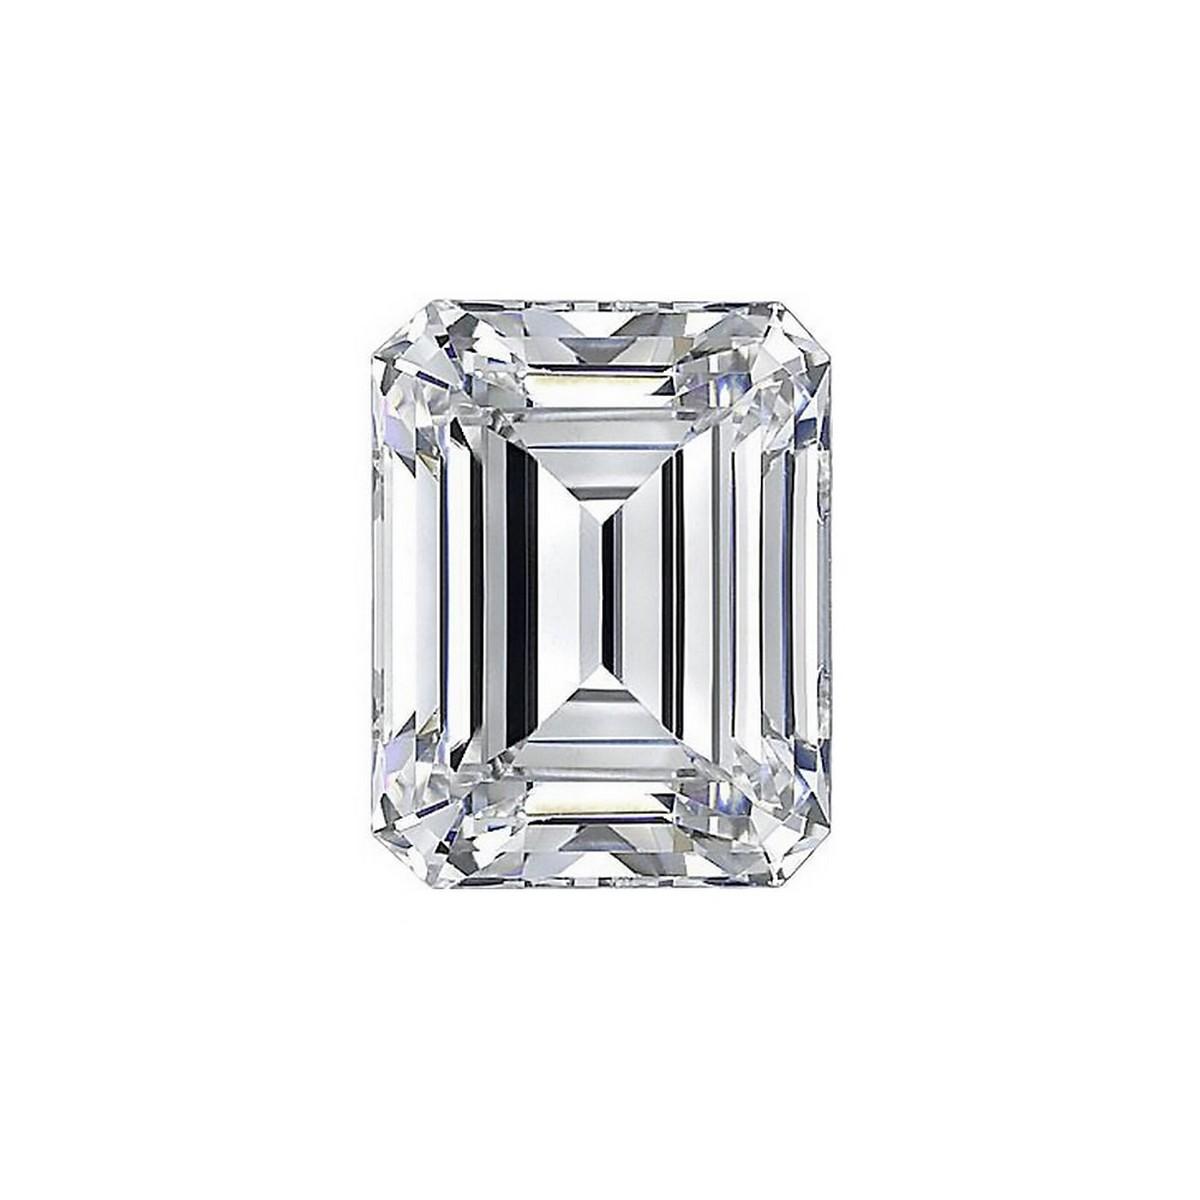 1.76 ctw. VS2 IGI Certified Emerald Cut Loose Diamond (LAB GROWN)